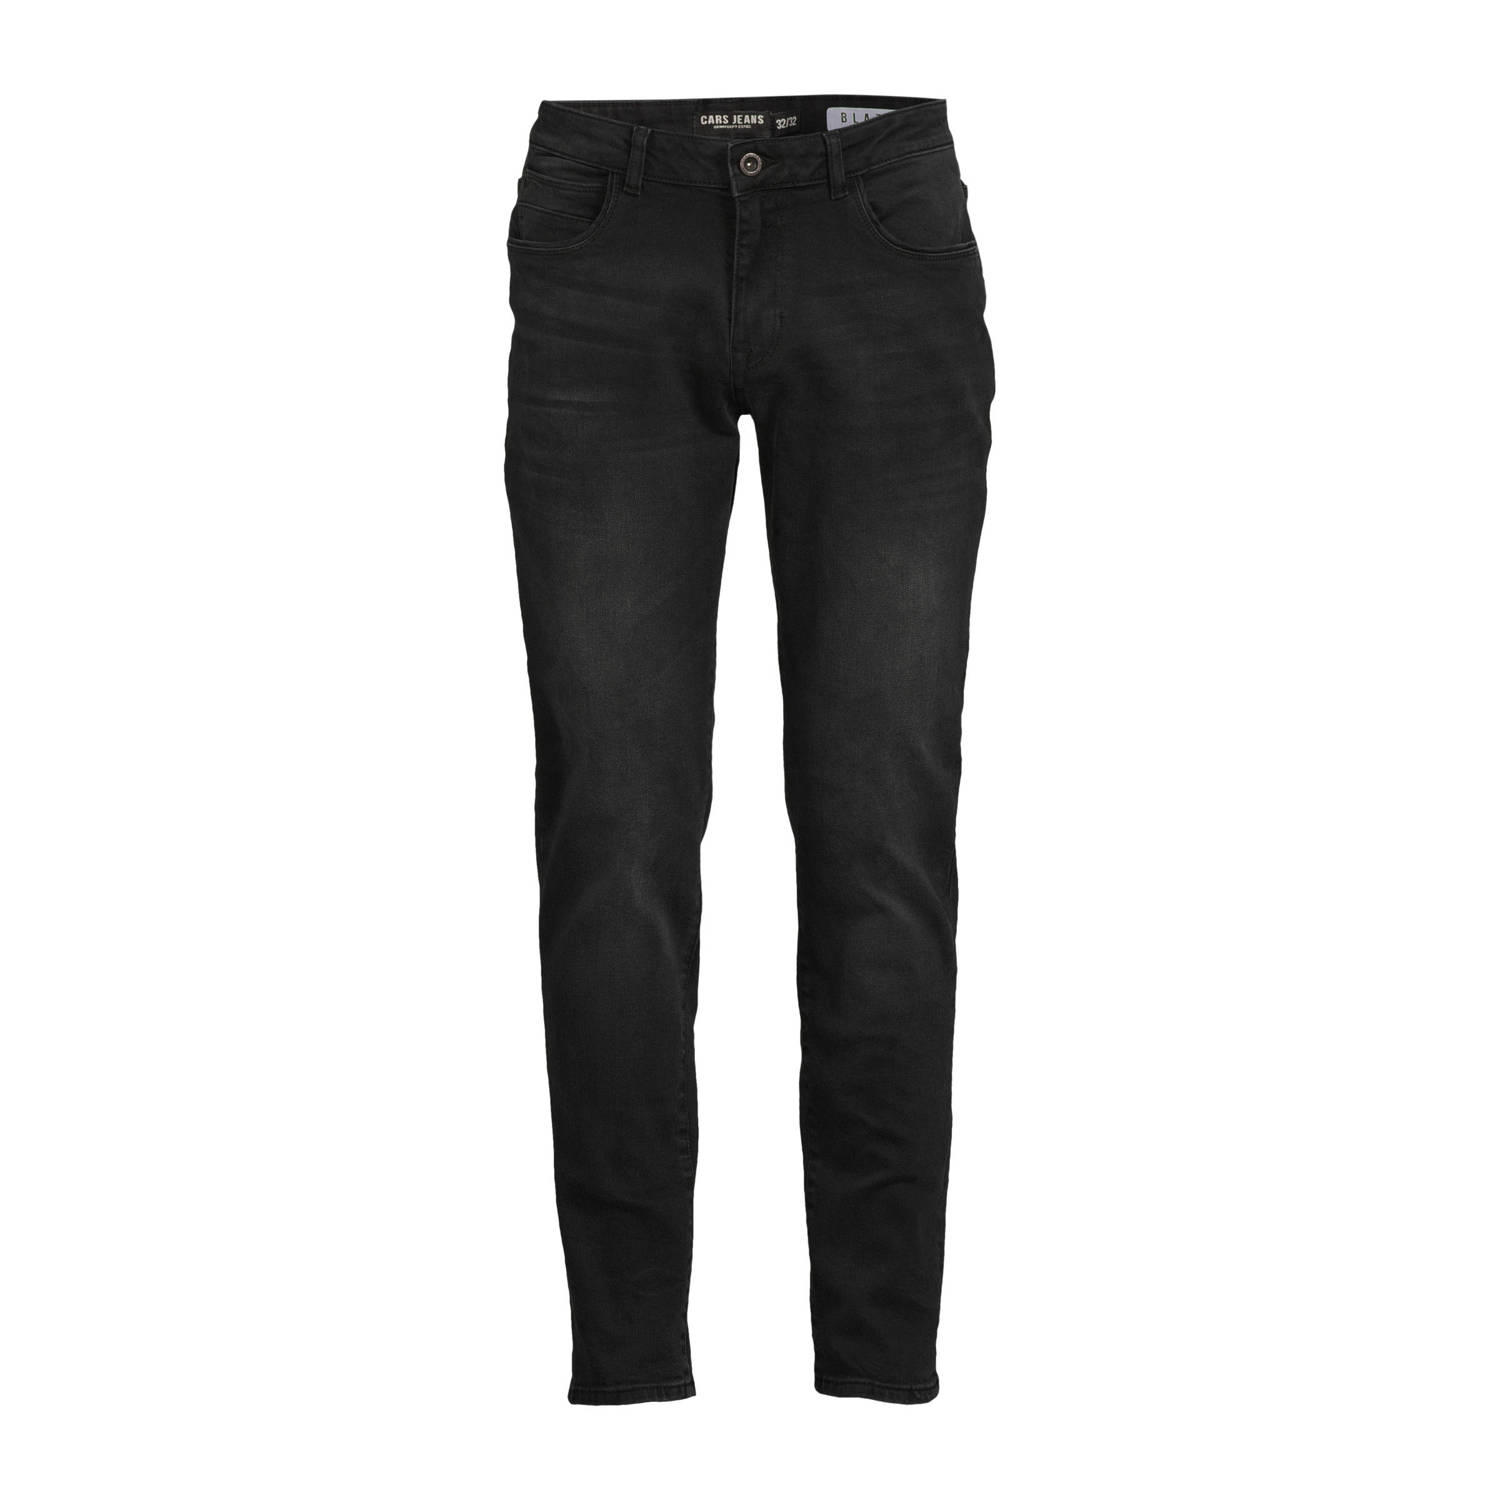 Cars slim fit jeans BLAZE black used